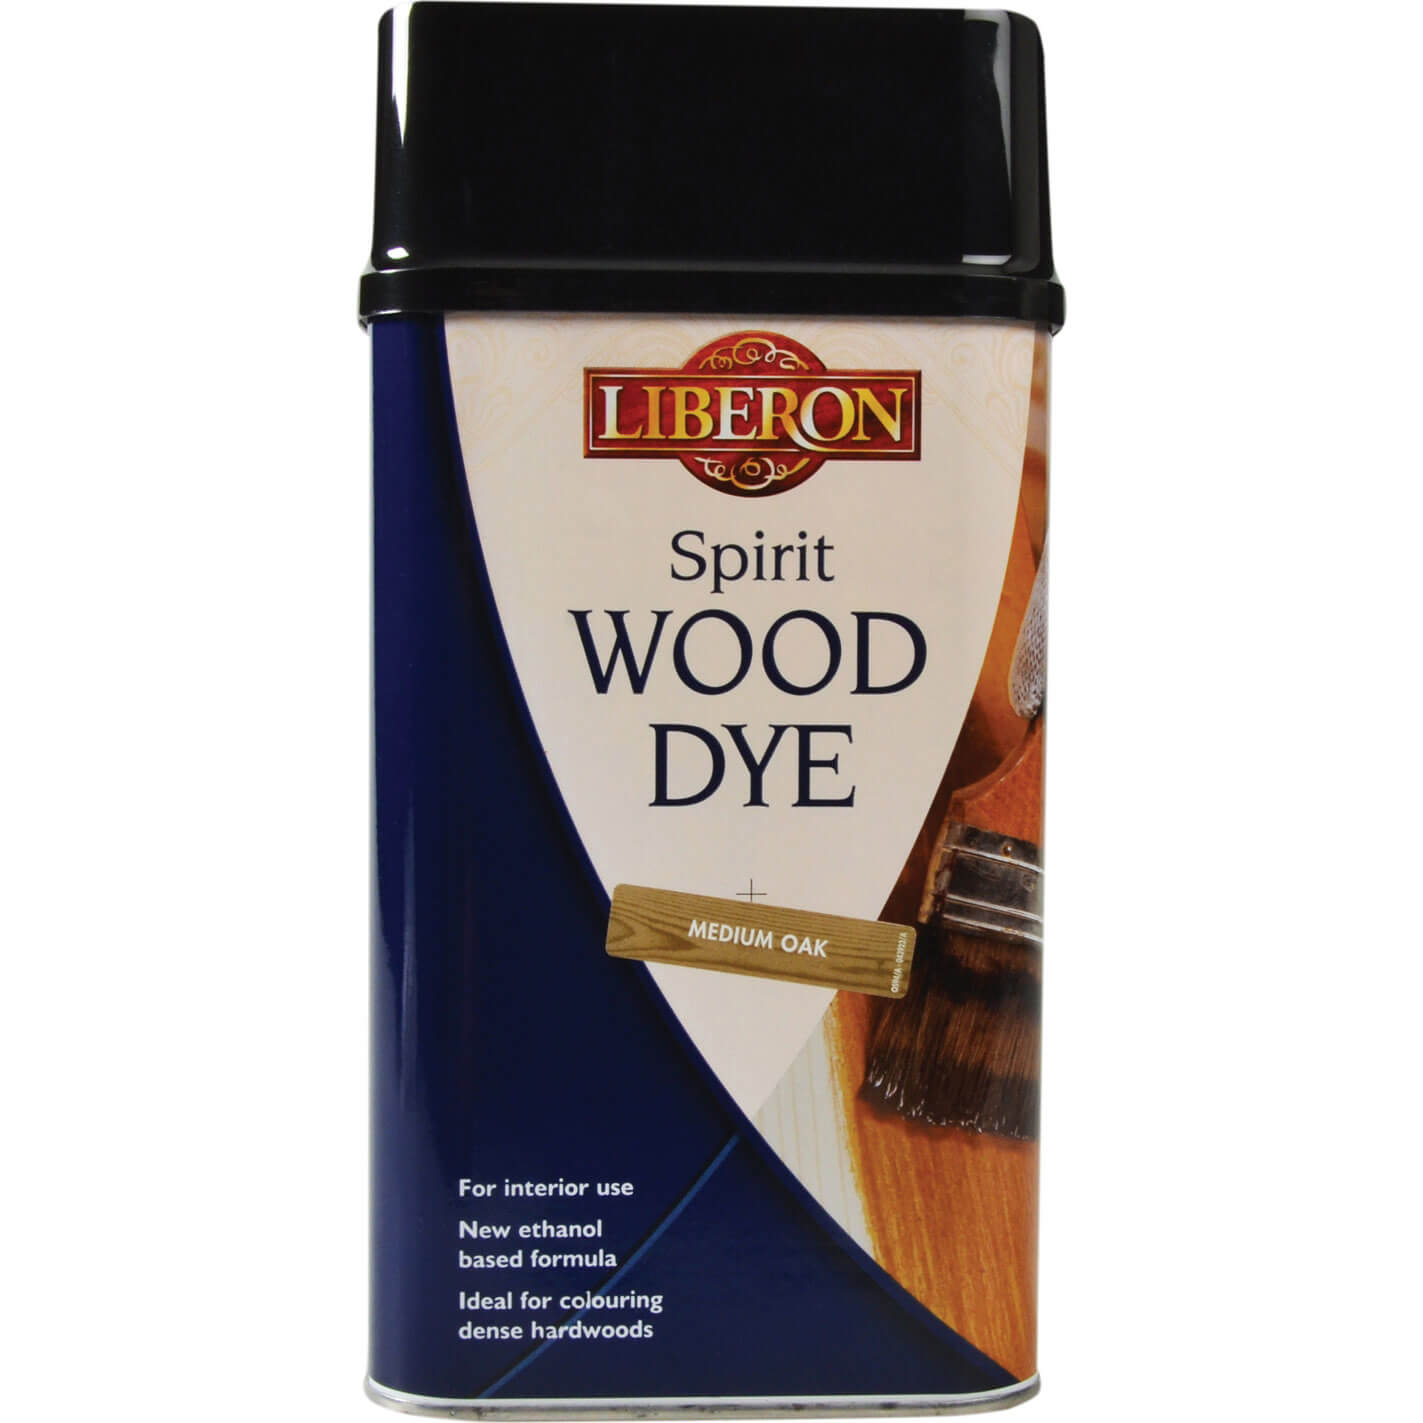 Image of Liberon Spirit Wood Dye Medium Oak 1l